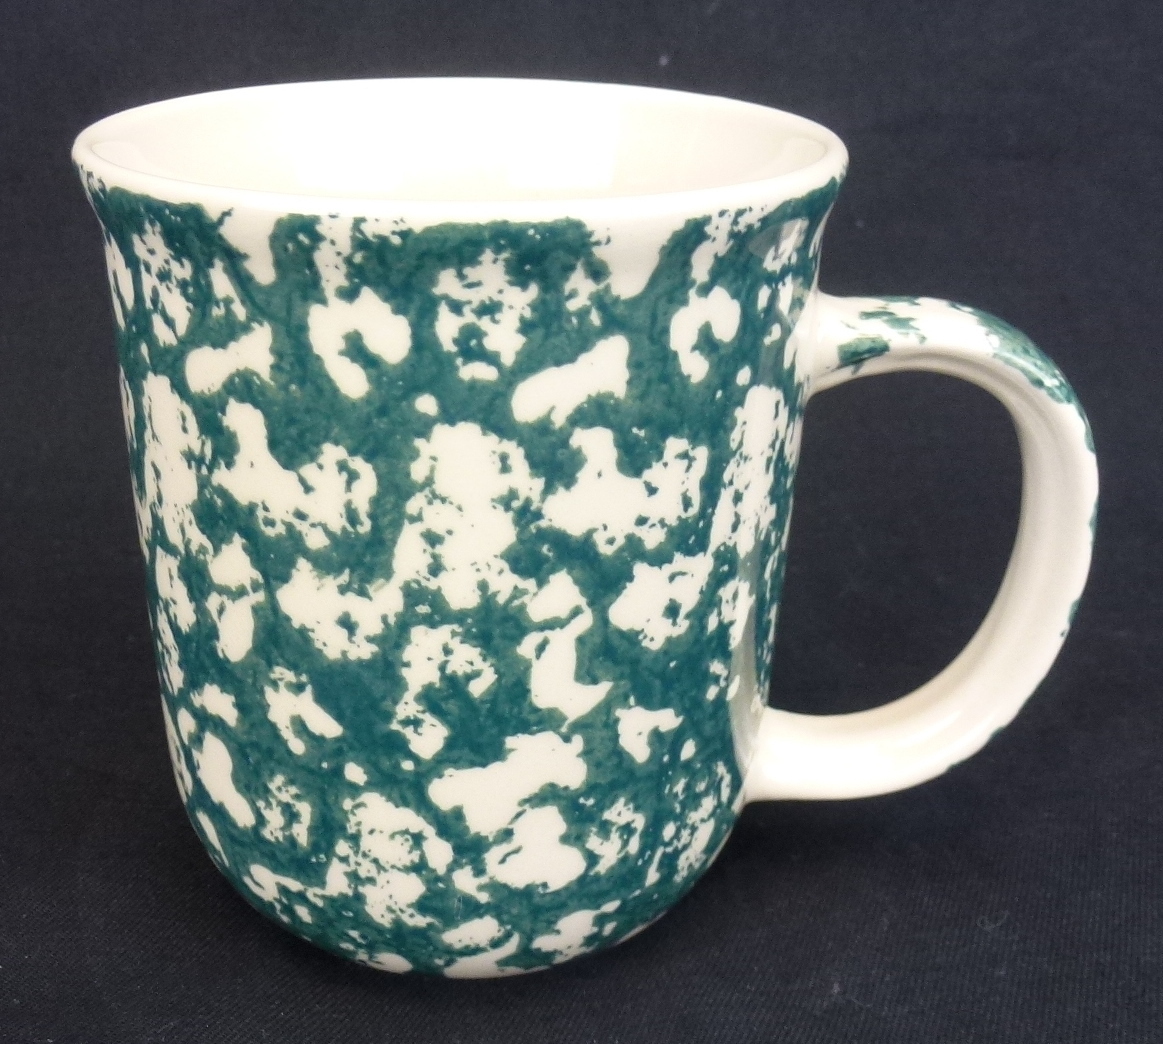 6) Tienshan Folk Craft Moose Country Mugs/Cups-Sponge Green-8 oz.;MICROWAVE SAFE - $9.99